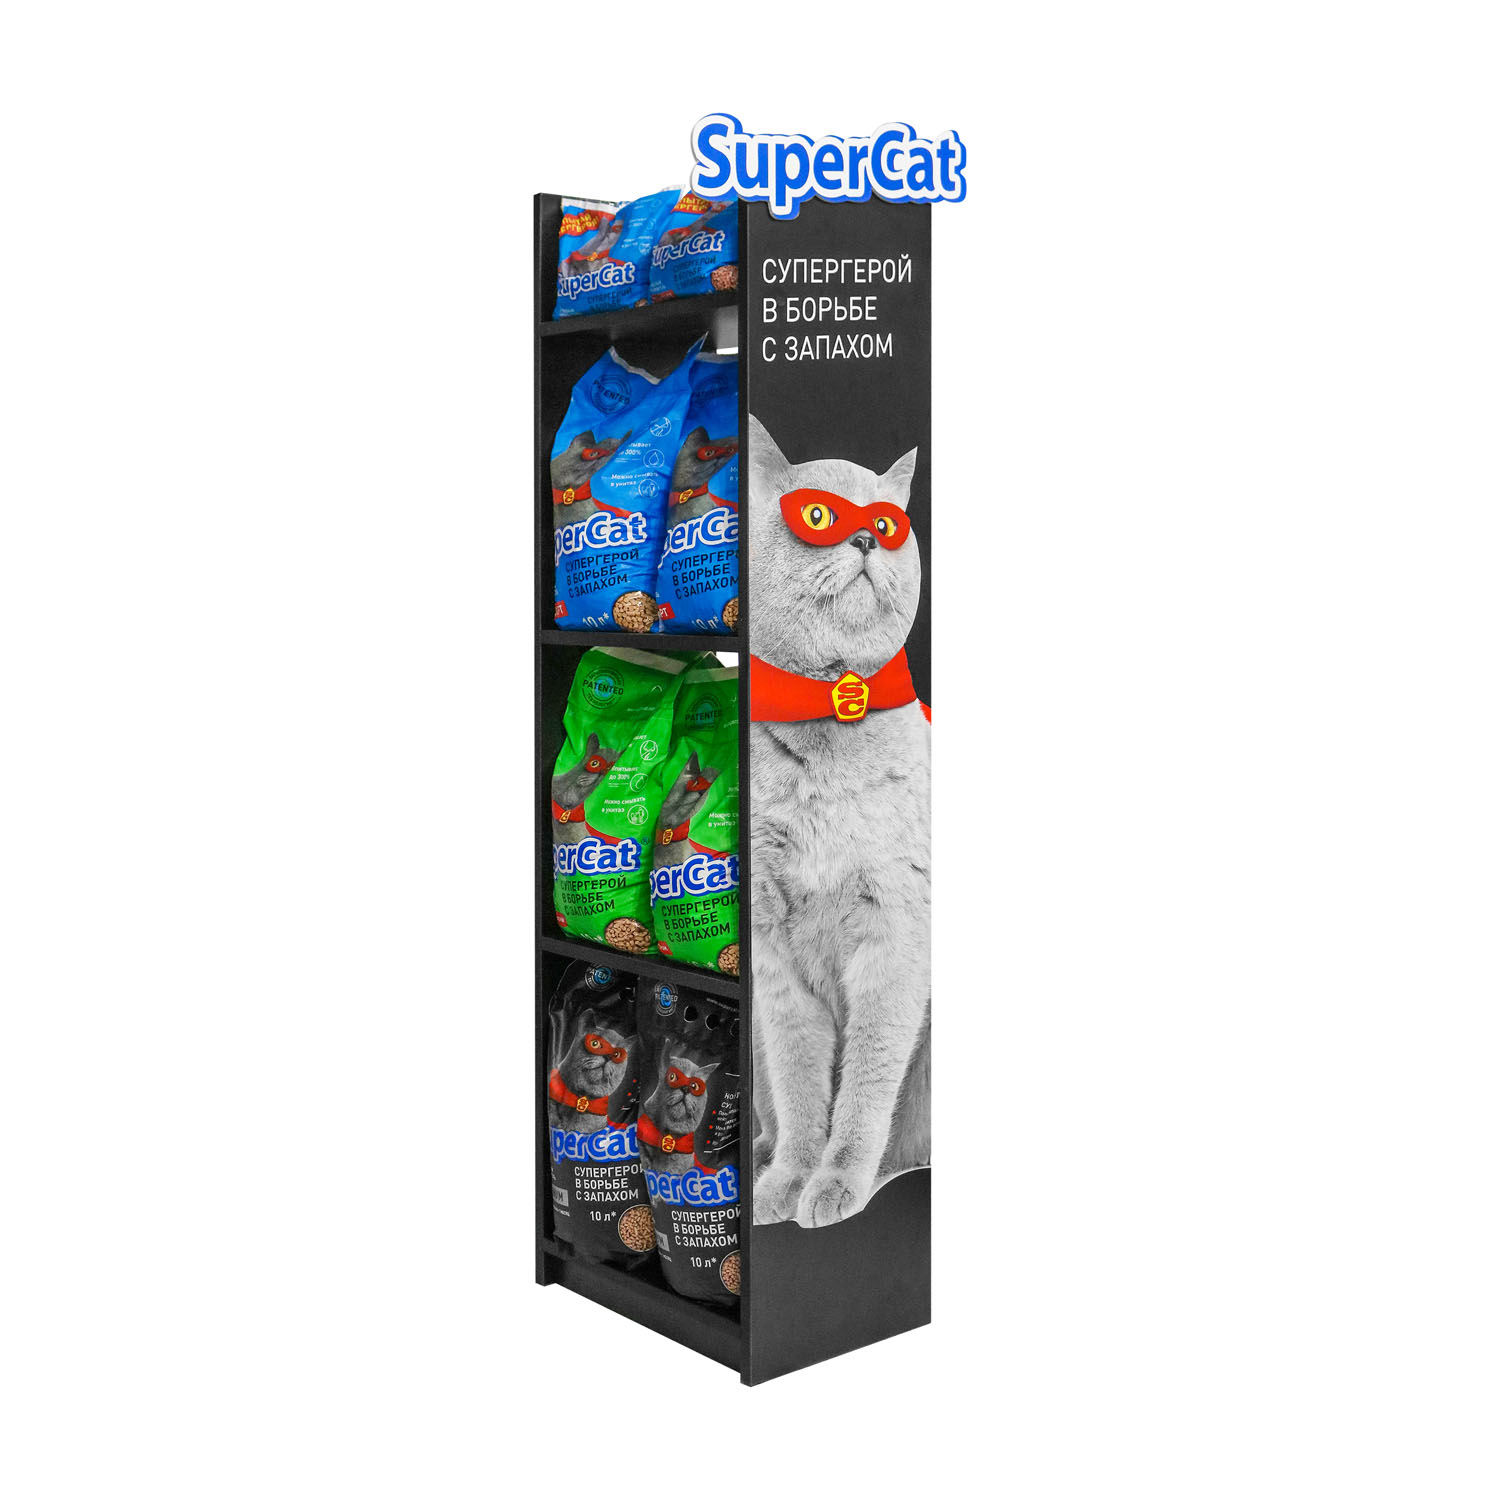 SuperCat trade equipment